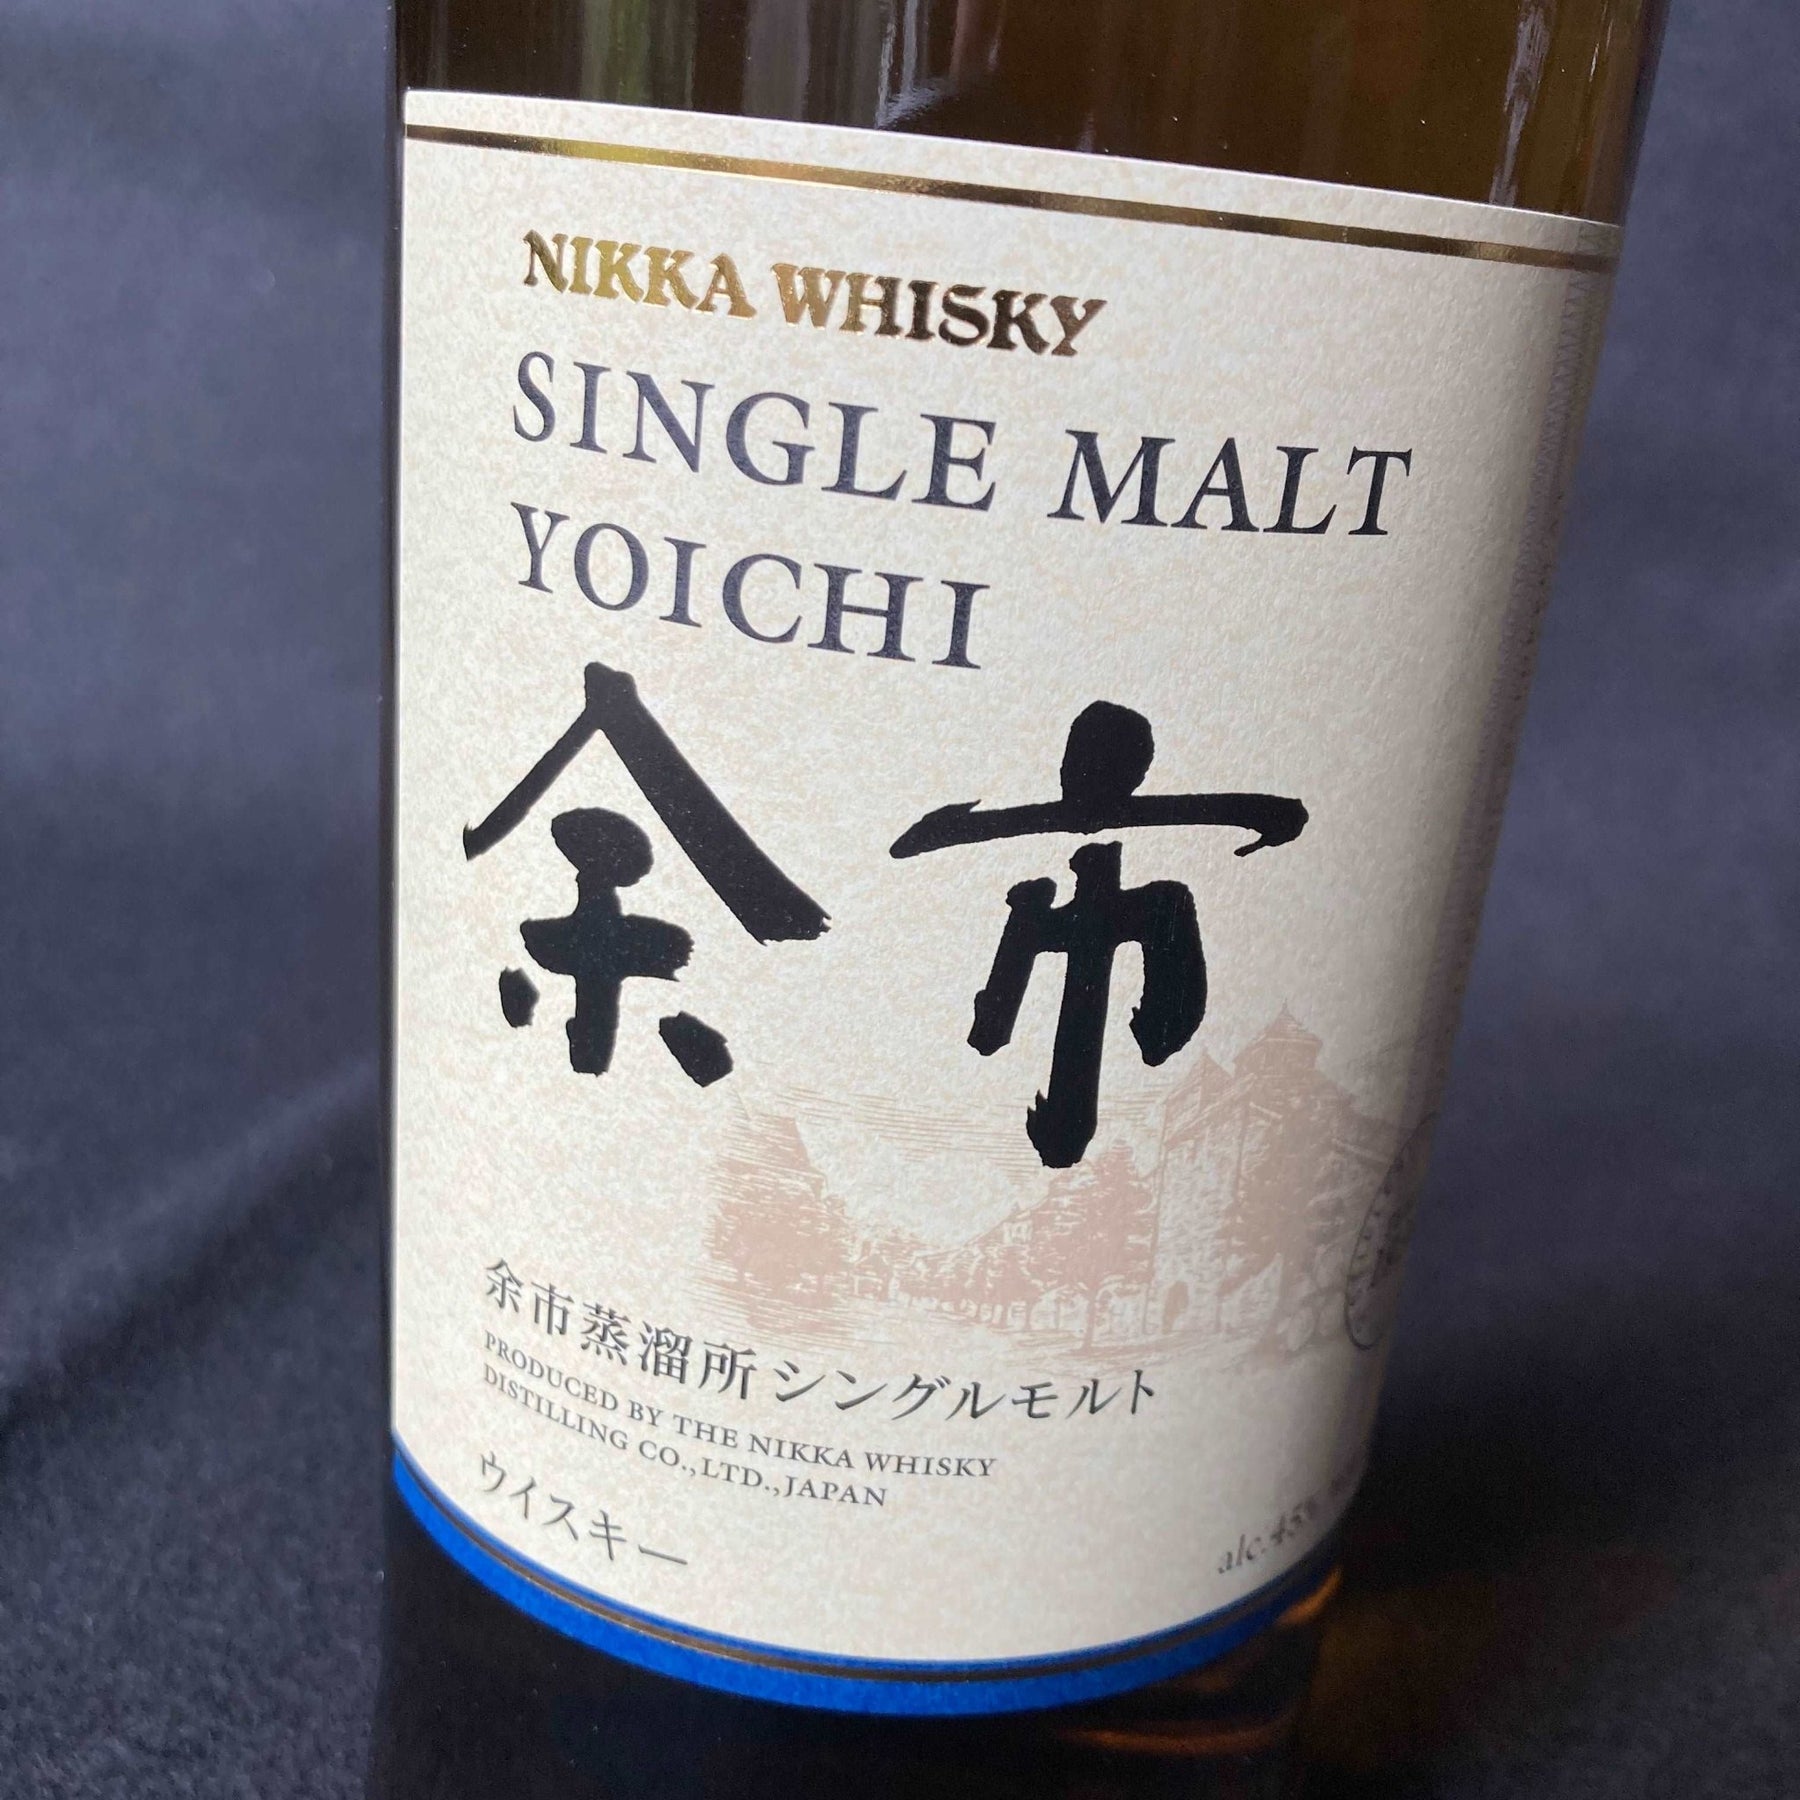 NIKKA - Yoichi, Whisky Japonais, Single Malt - Notes de Fruits